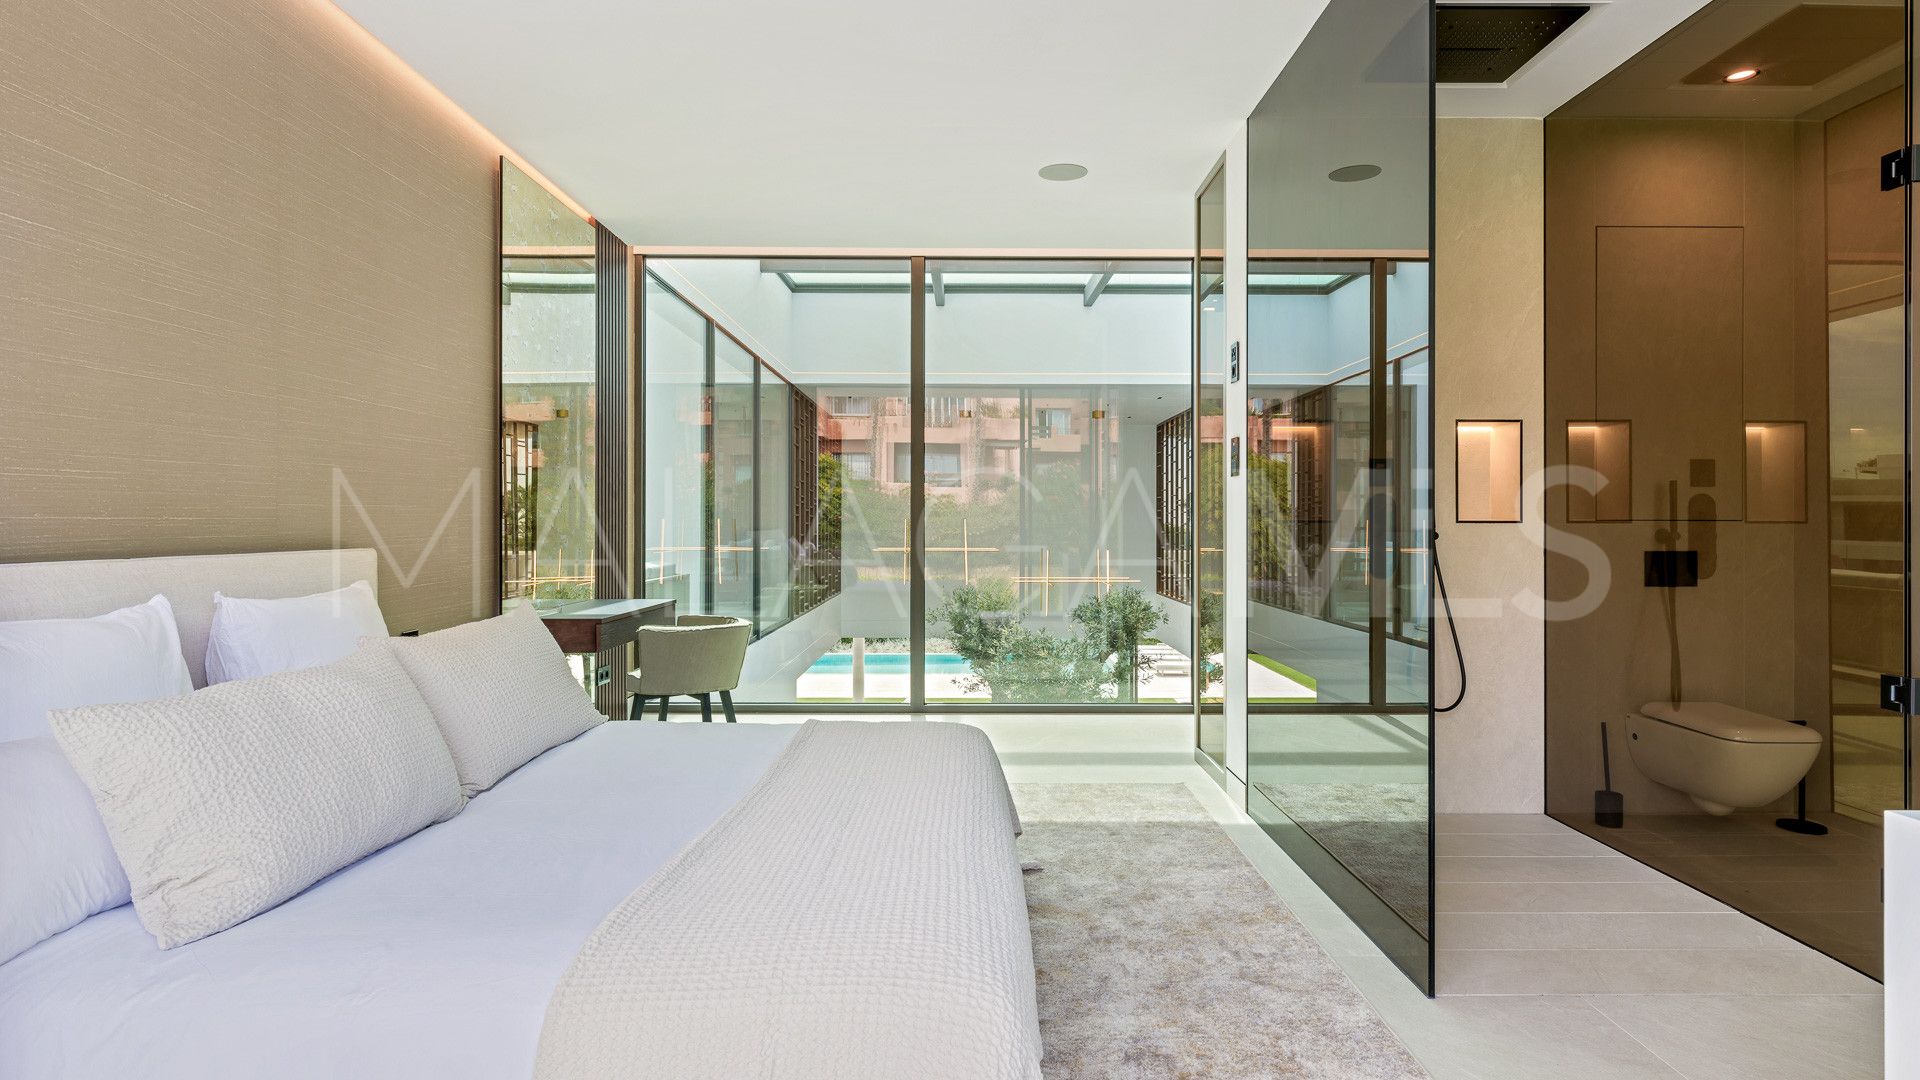 5 bedrooms villa in Golden Mile for sale